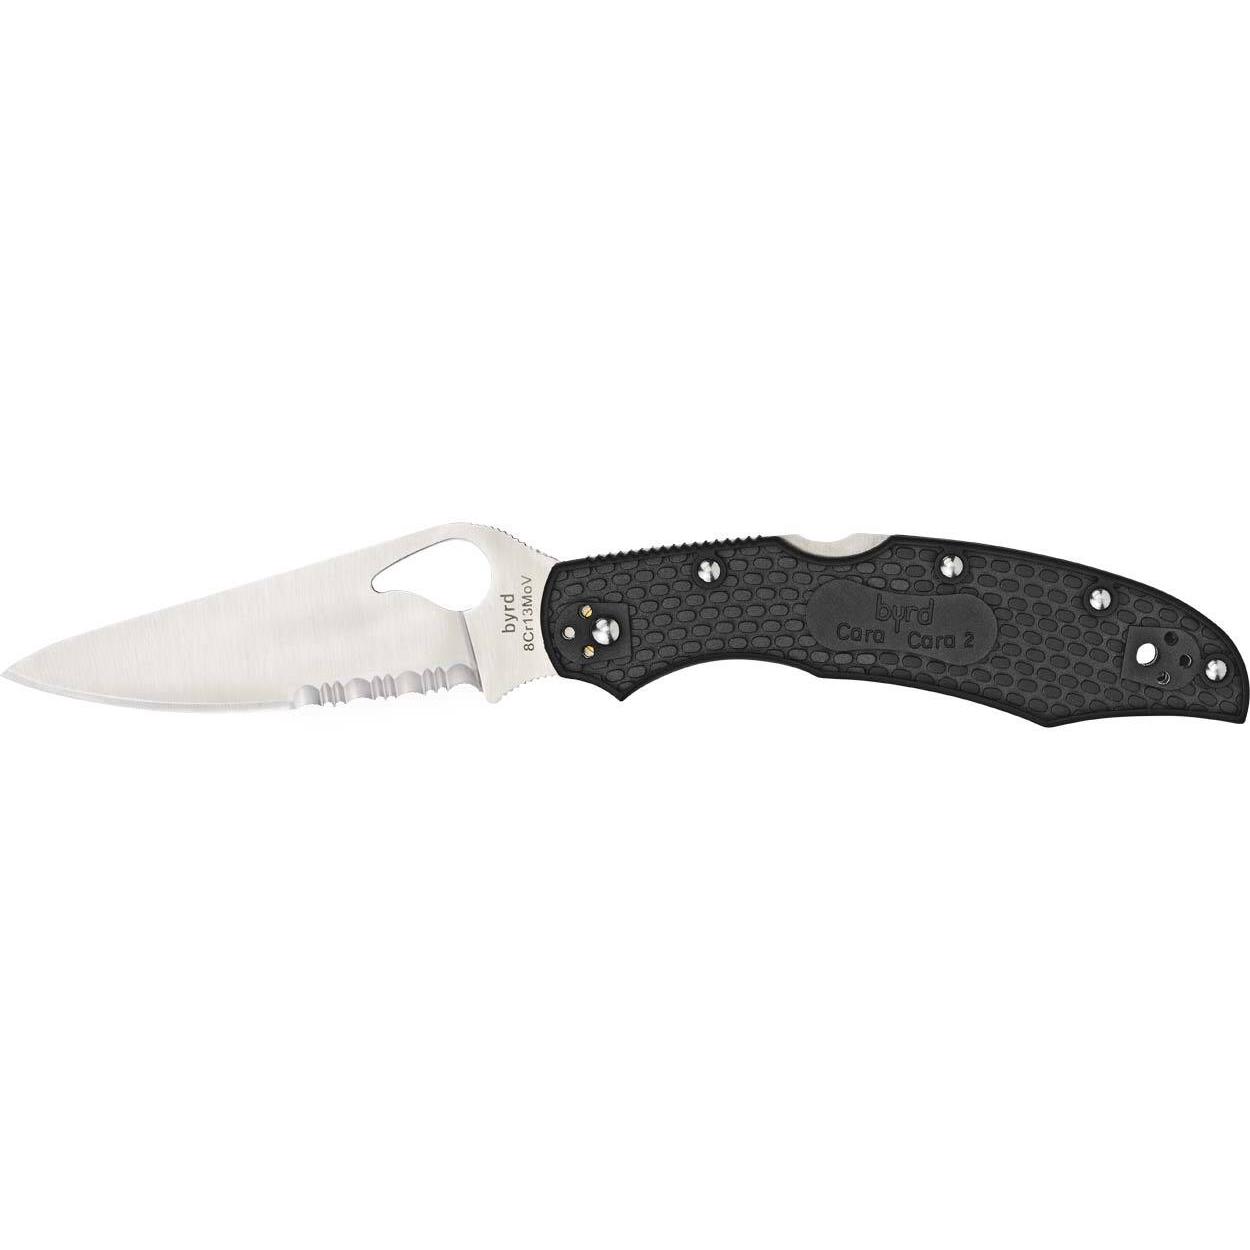 Нож Spyderco Byrd Cara Cara2 FRN Black Half Serrated BY03PSBK2 87.11.17